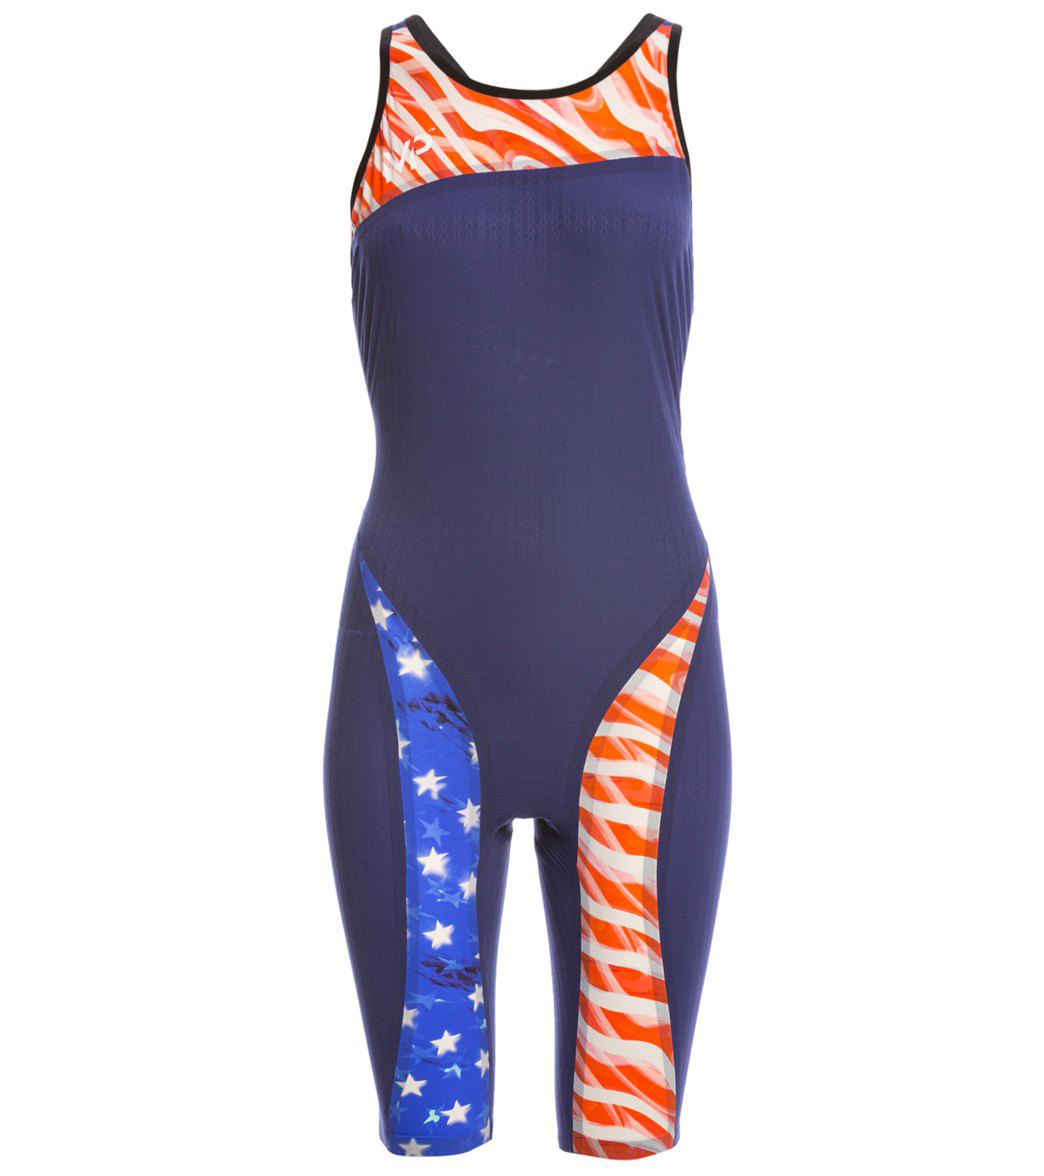 Mp Michael Phelps Women's Xpresso Open Back Kneeskin Tech Suit Swimsuit - Navy Blue/Red 34 - Swimoutlet.com